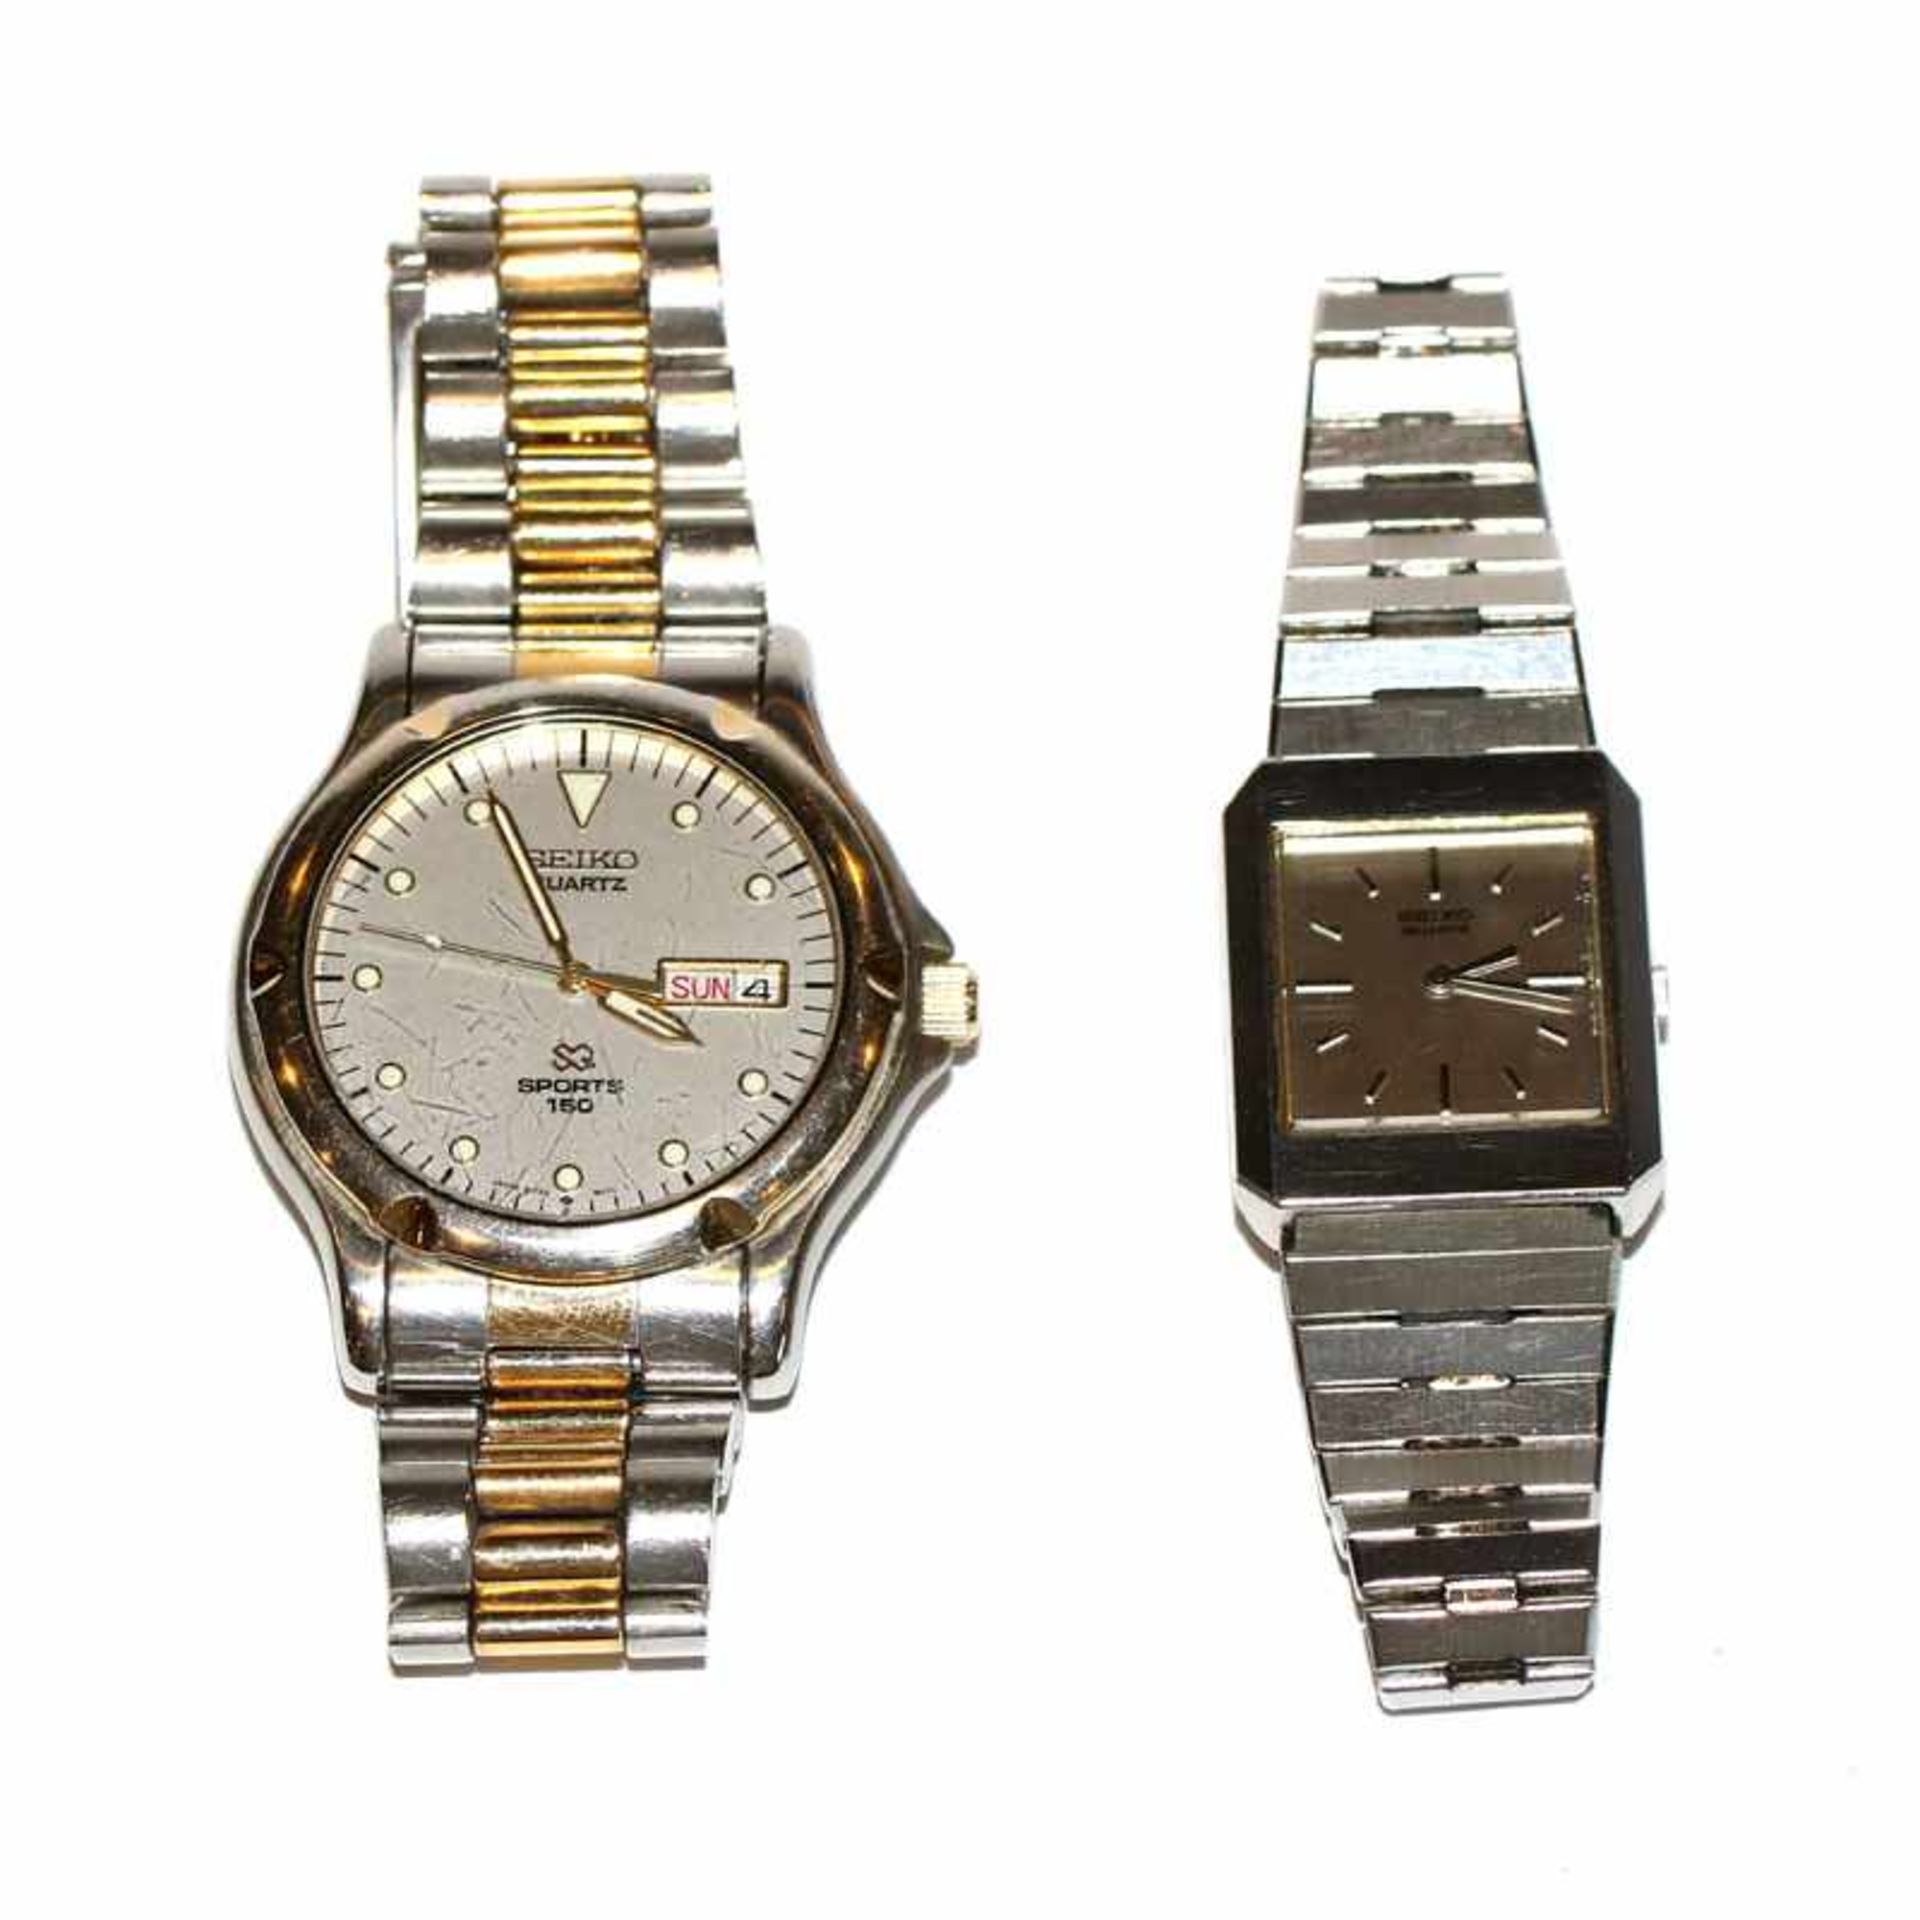 Seiko Herren-Armbanduhr, Quartz, Sports 150, und Seiko Damen-Armbanduhr, Quartz, beide Stahl und